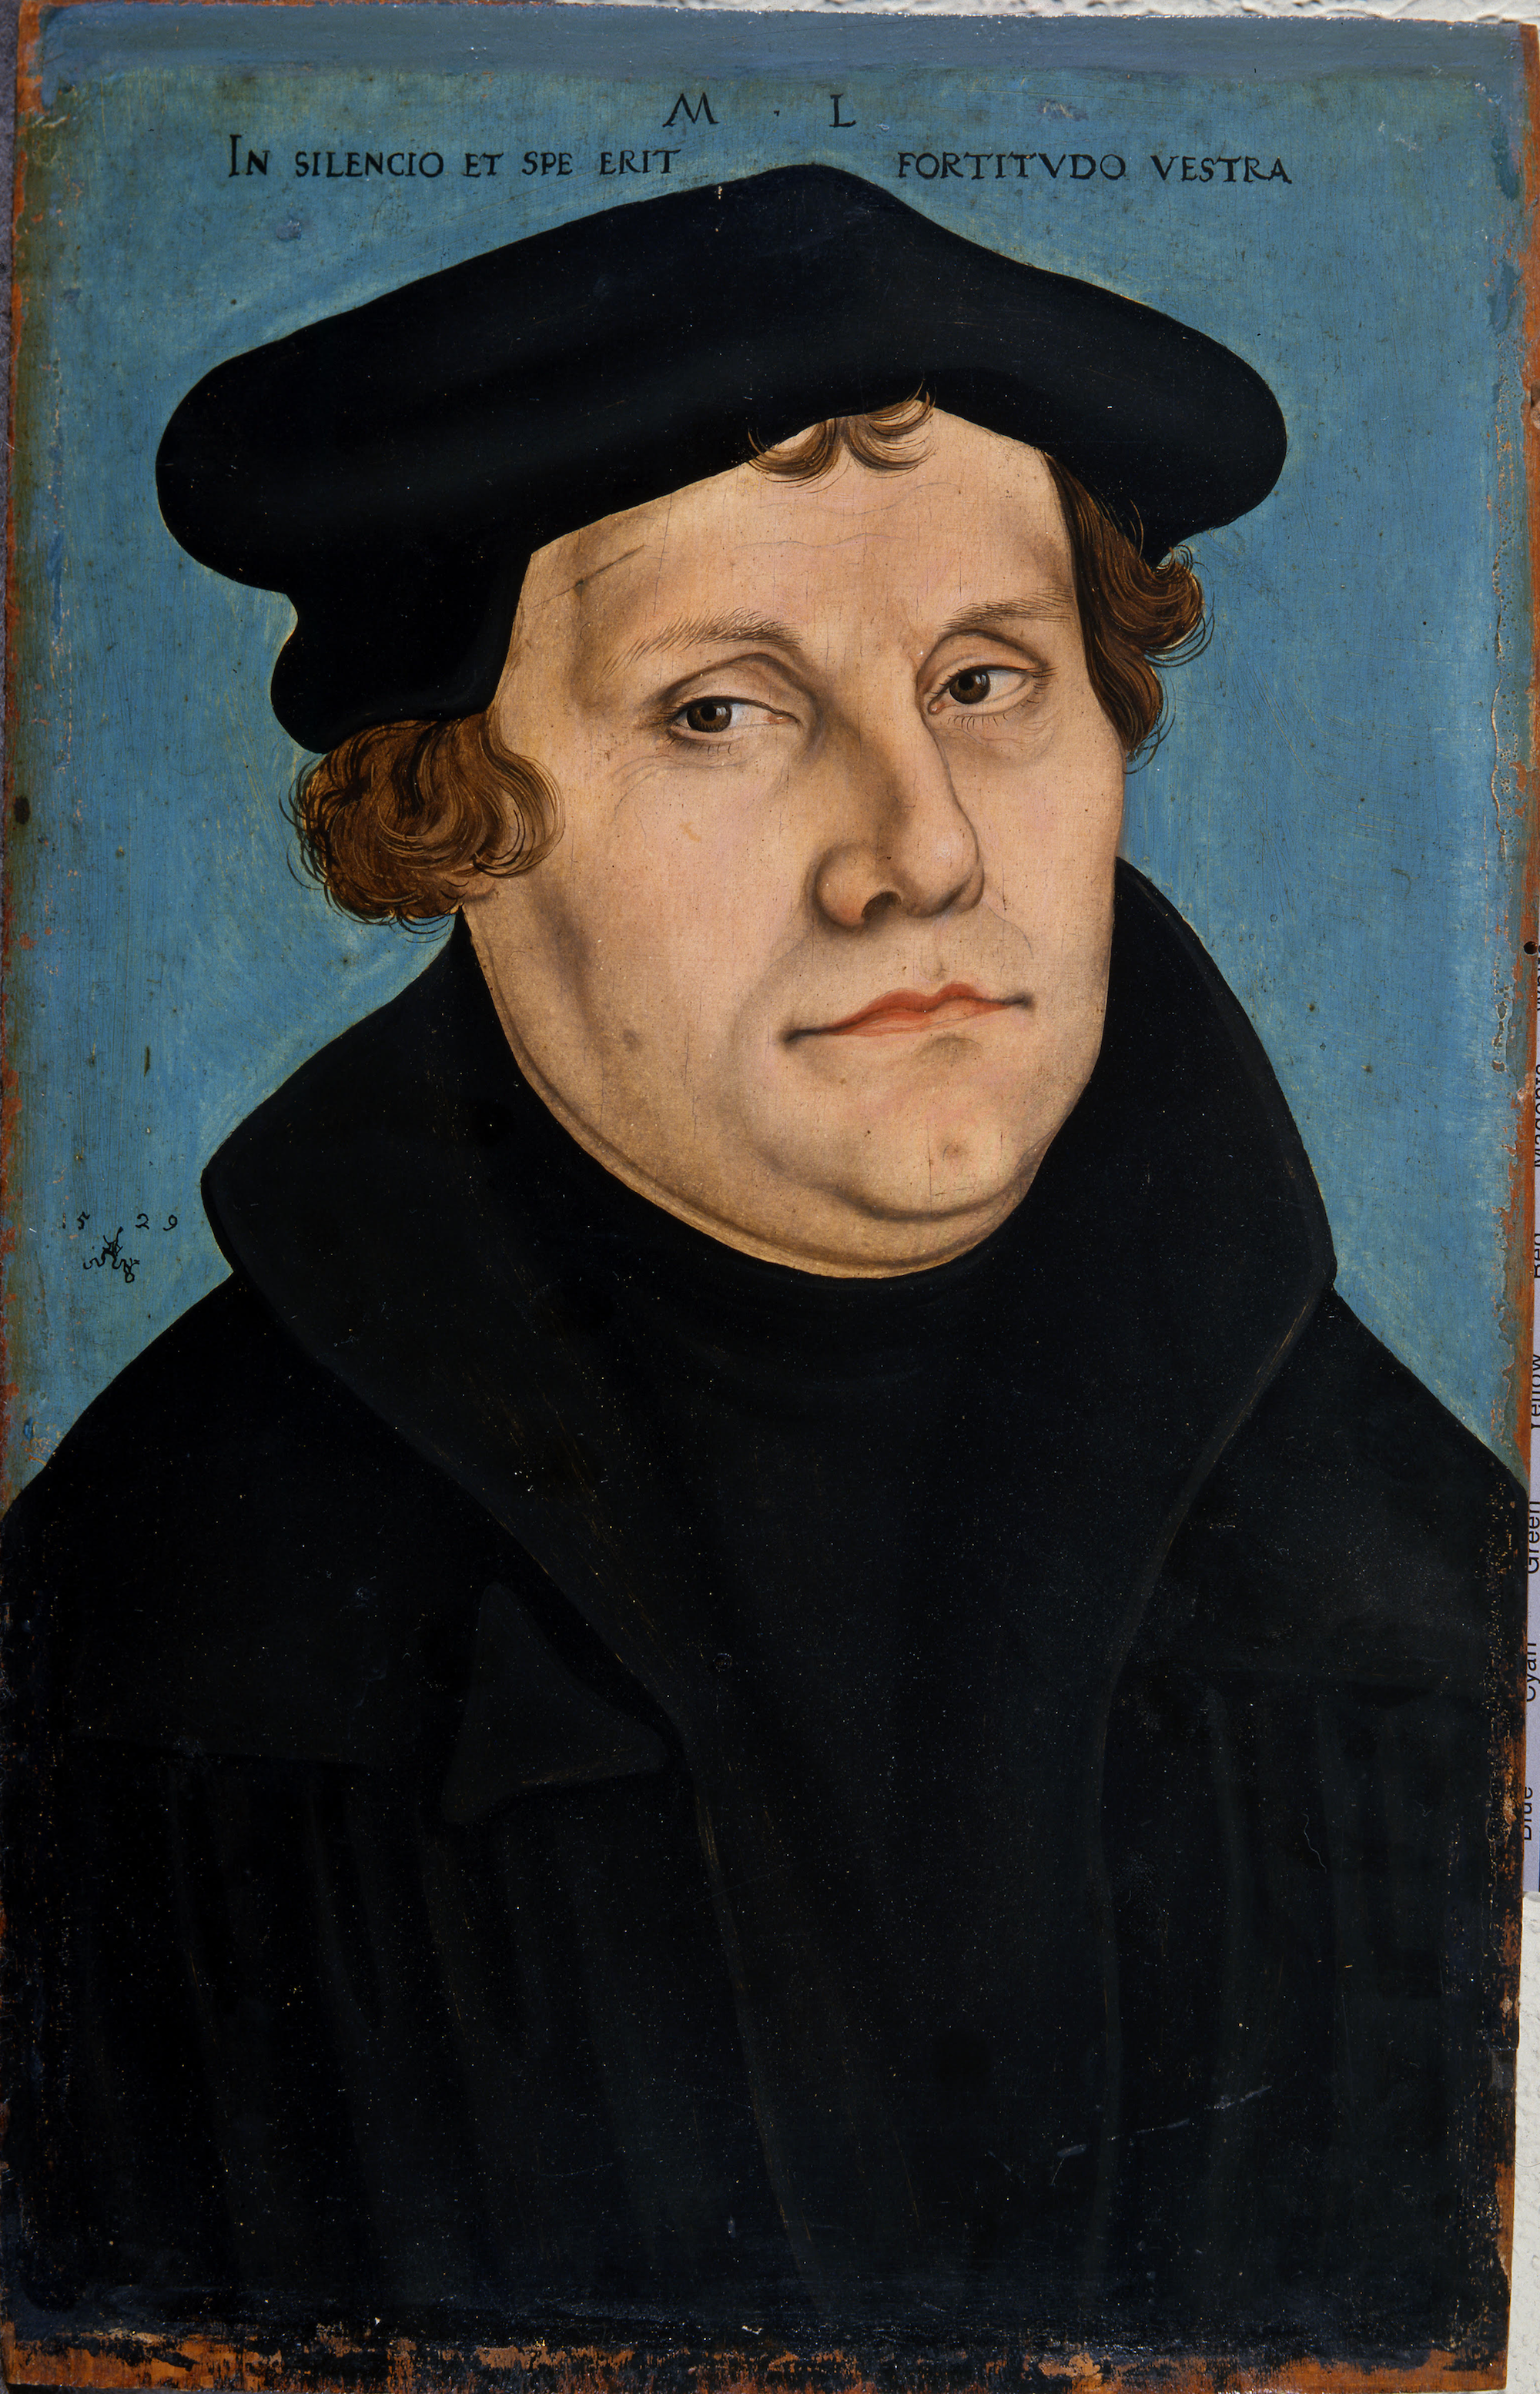 Martinho Lutero by Lucas Cranach the Elder - 1529 